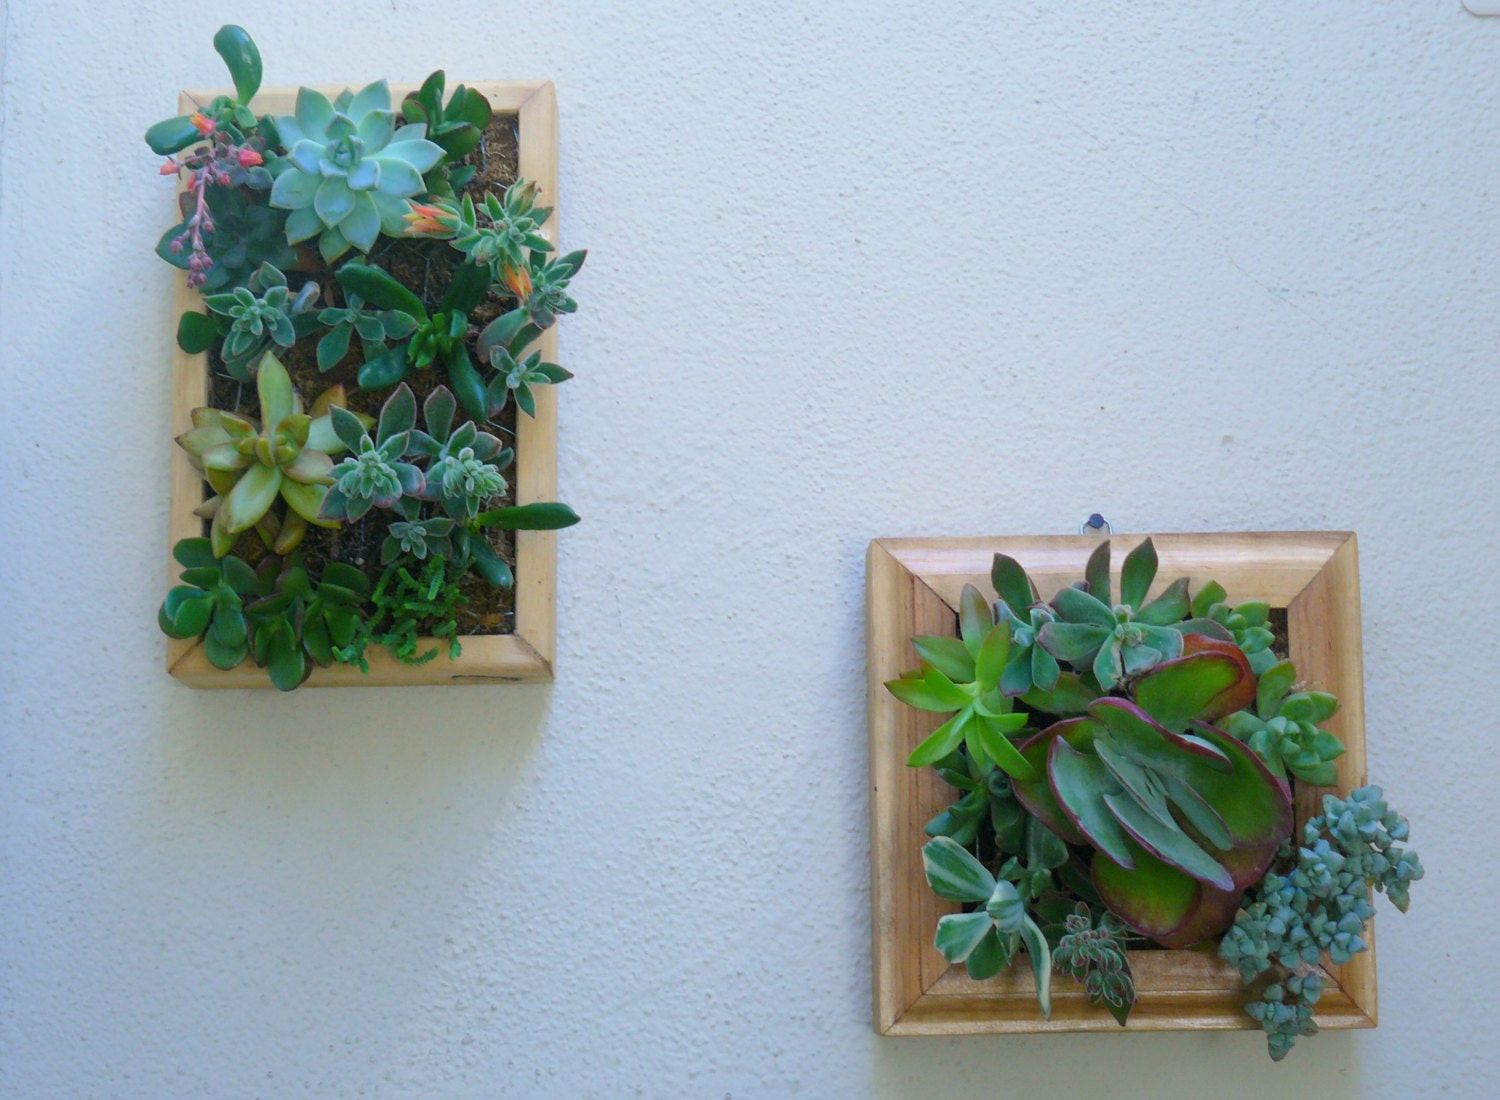 Best ideas about Succulent Wall Art
. Save or Pin Vertical Succulent Planter Living Wall Art Kit Vertical Now.